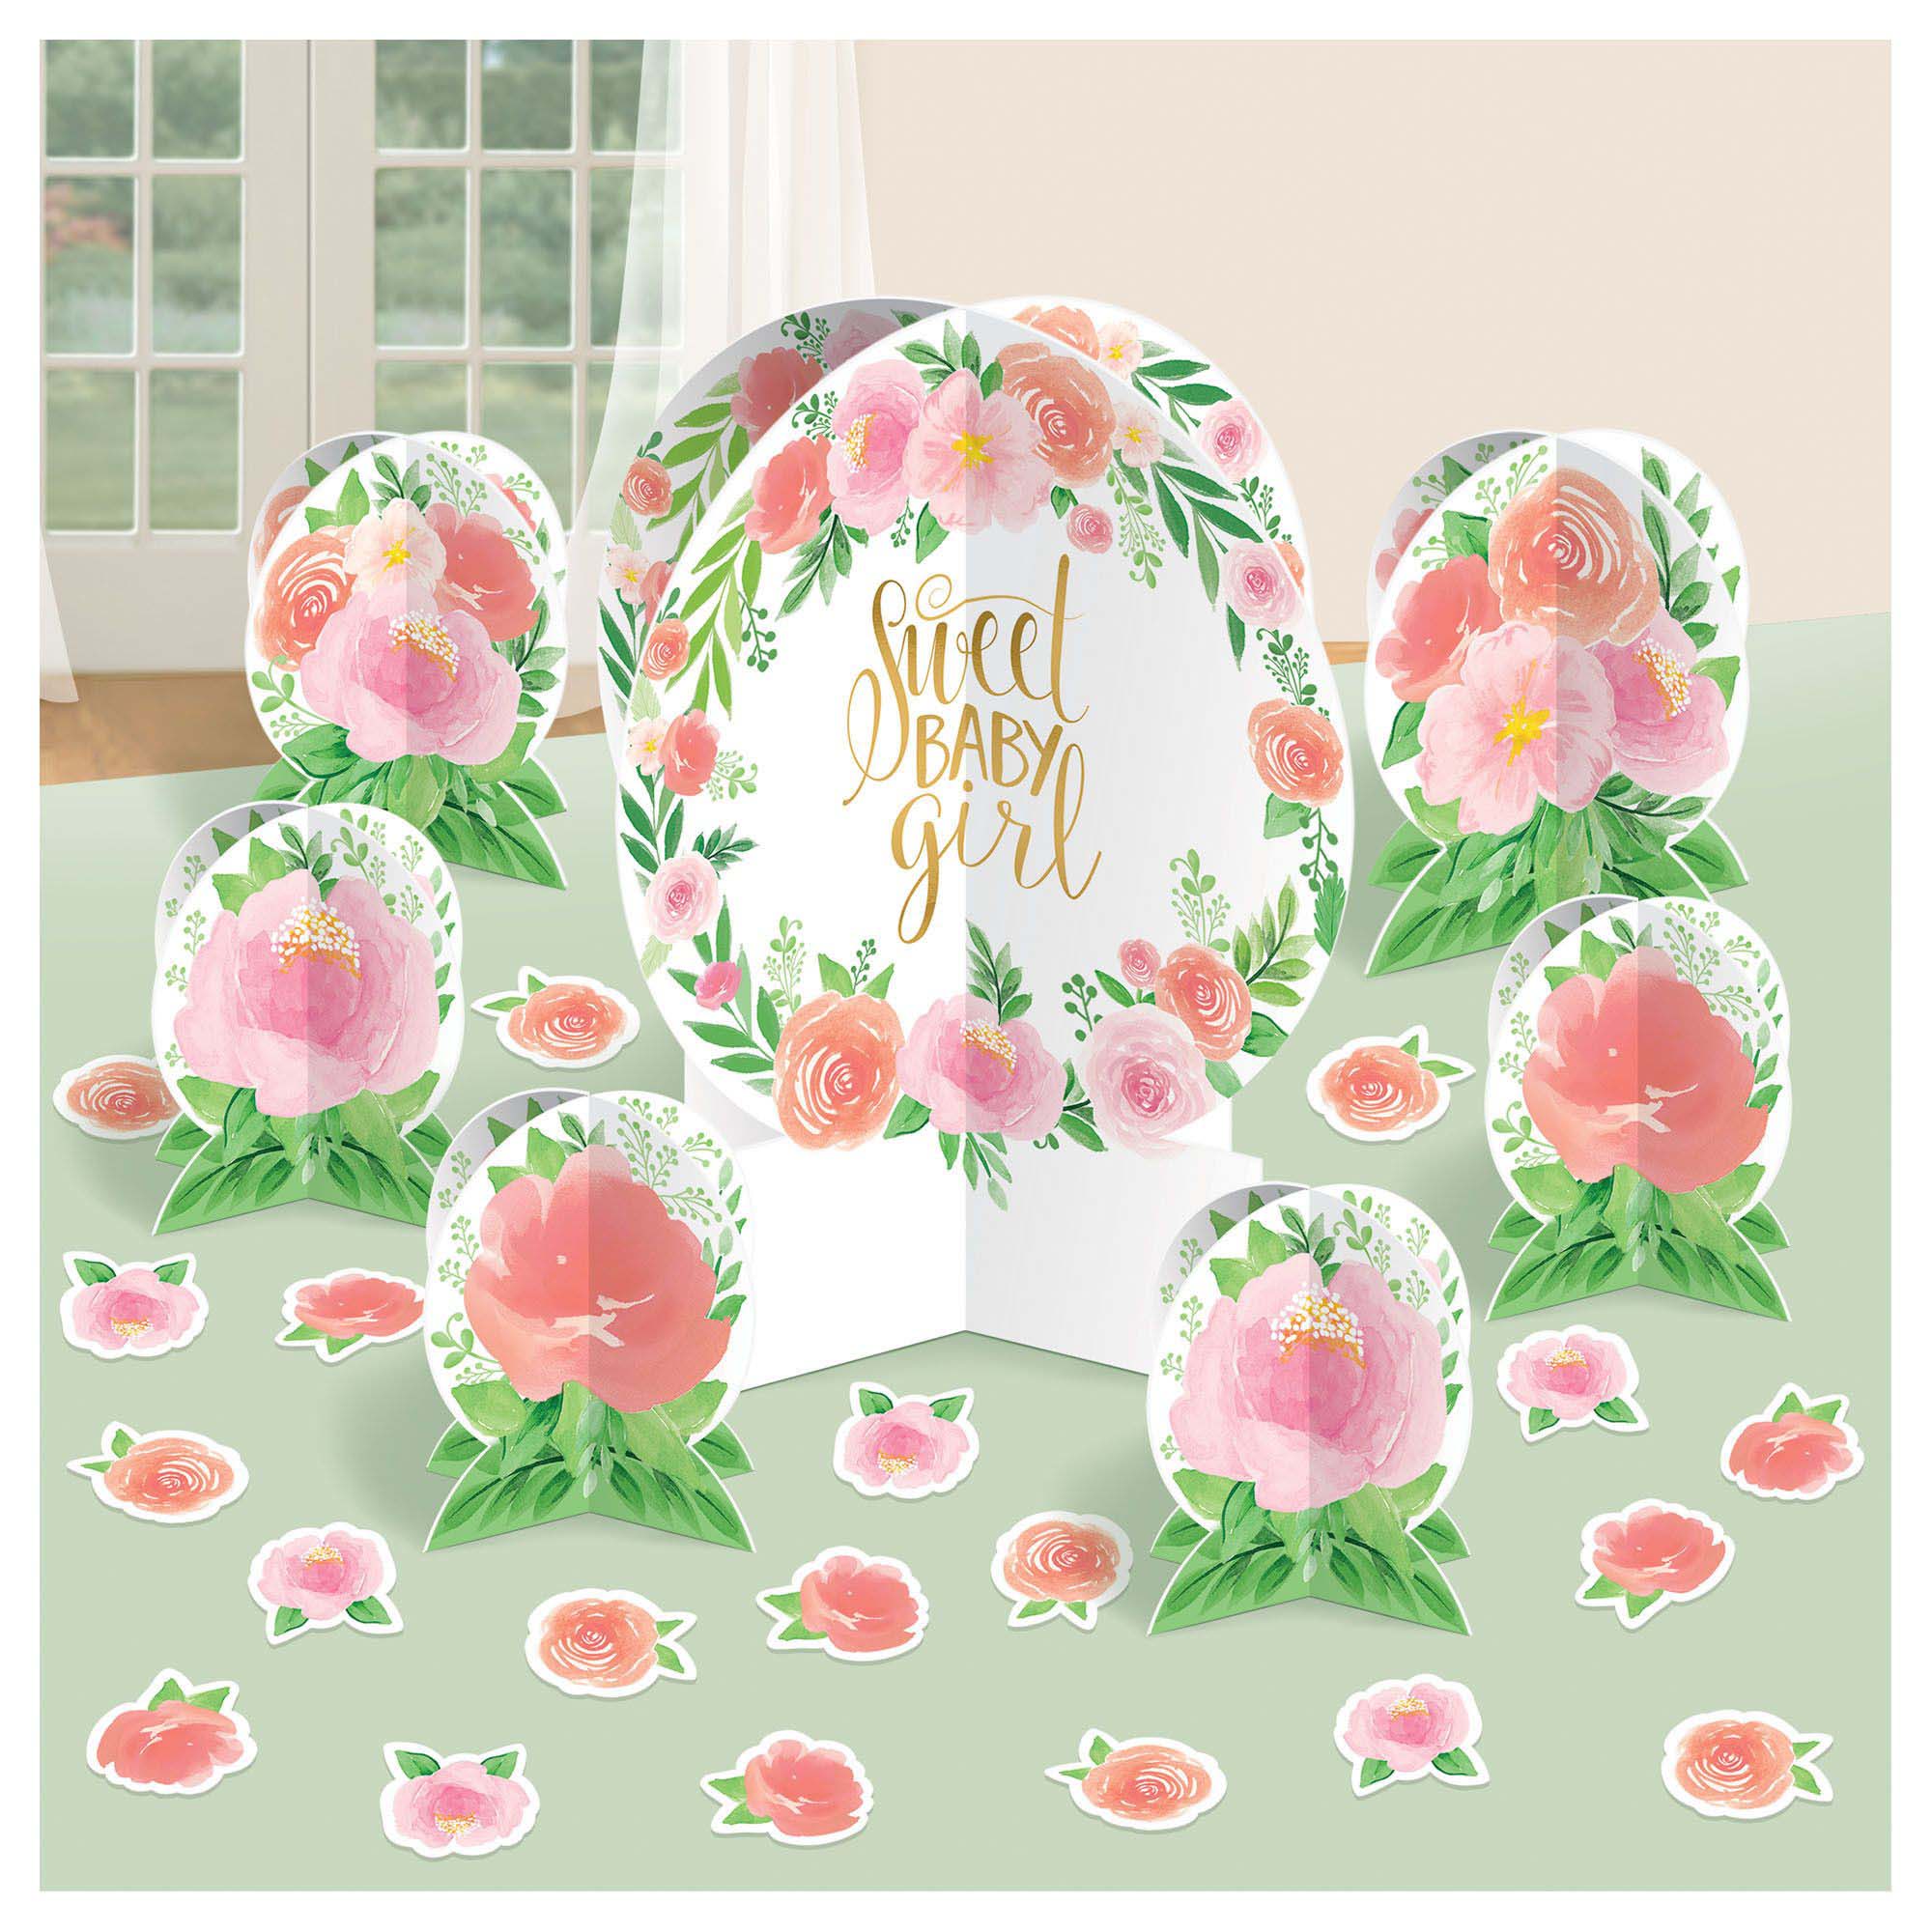 Floral Baby Paper Table Centerpiece Decoration Kit, 1 Count